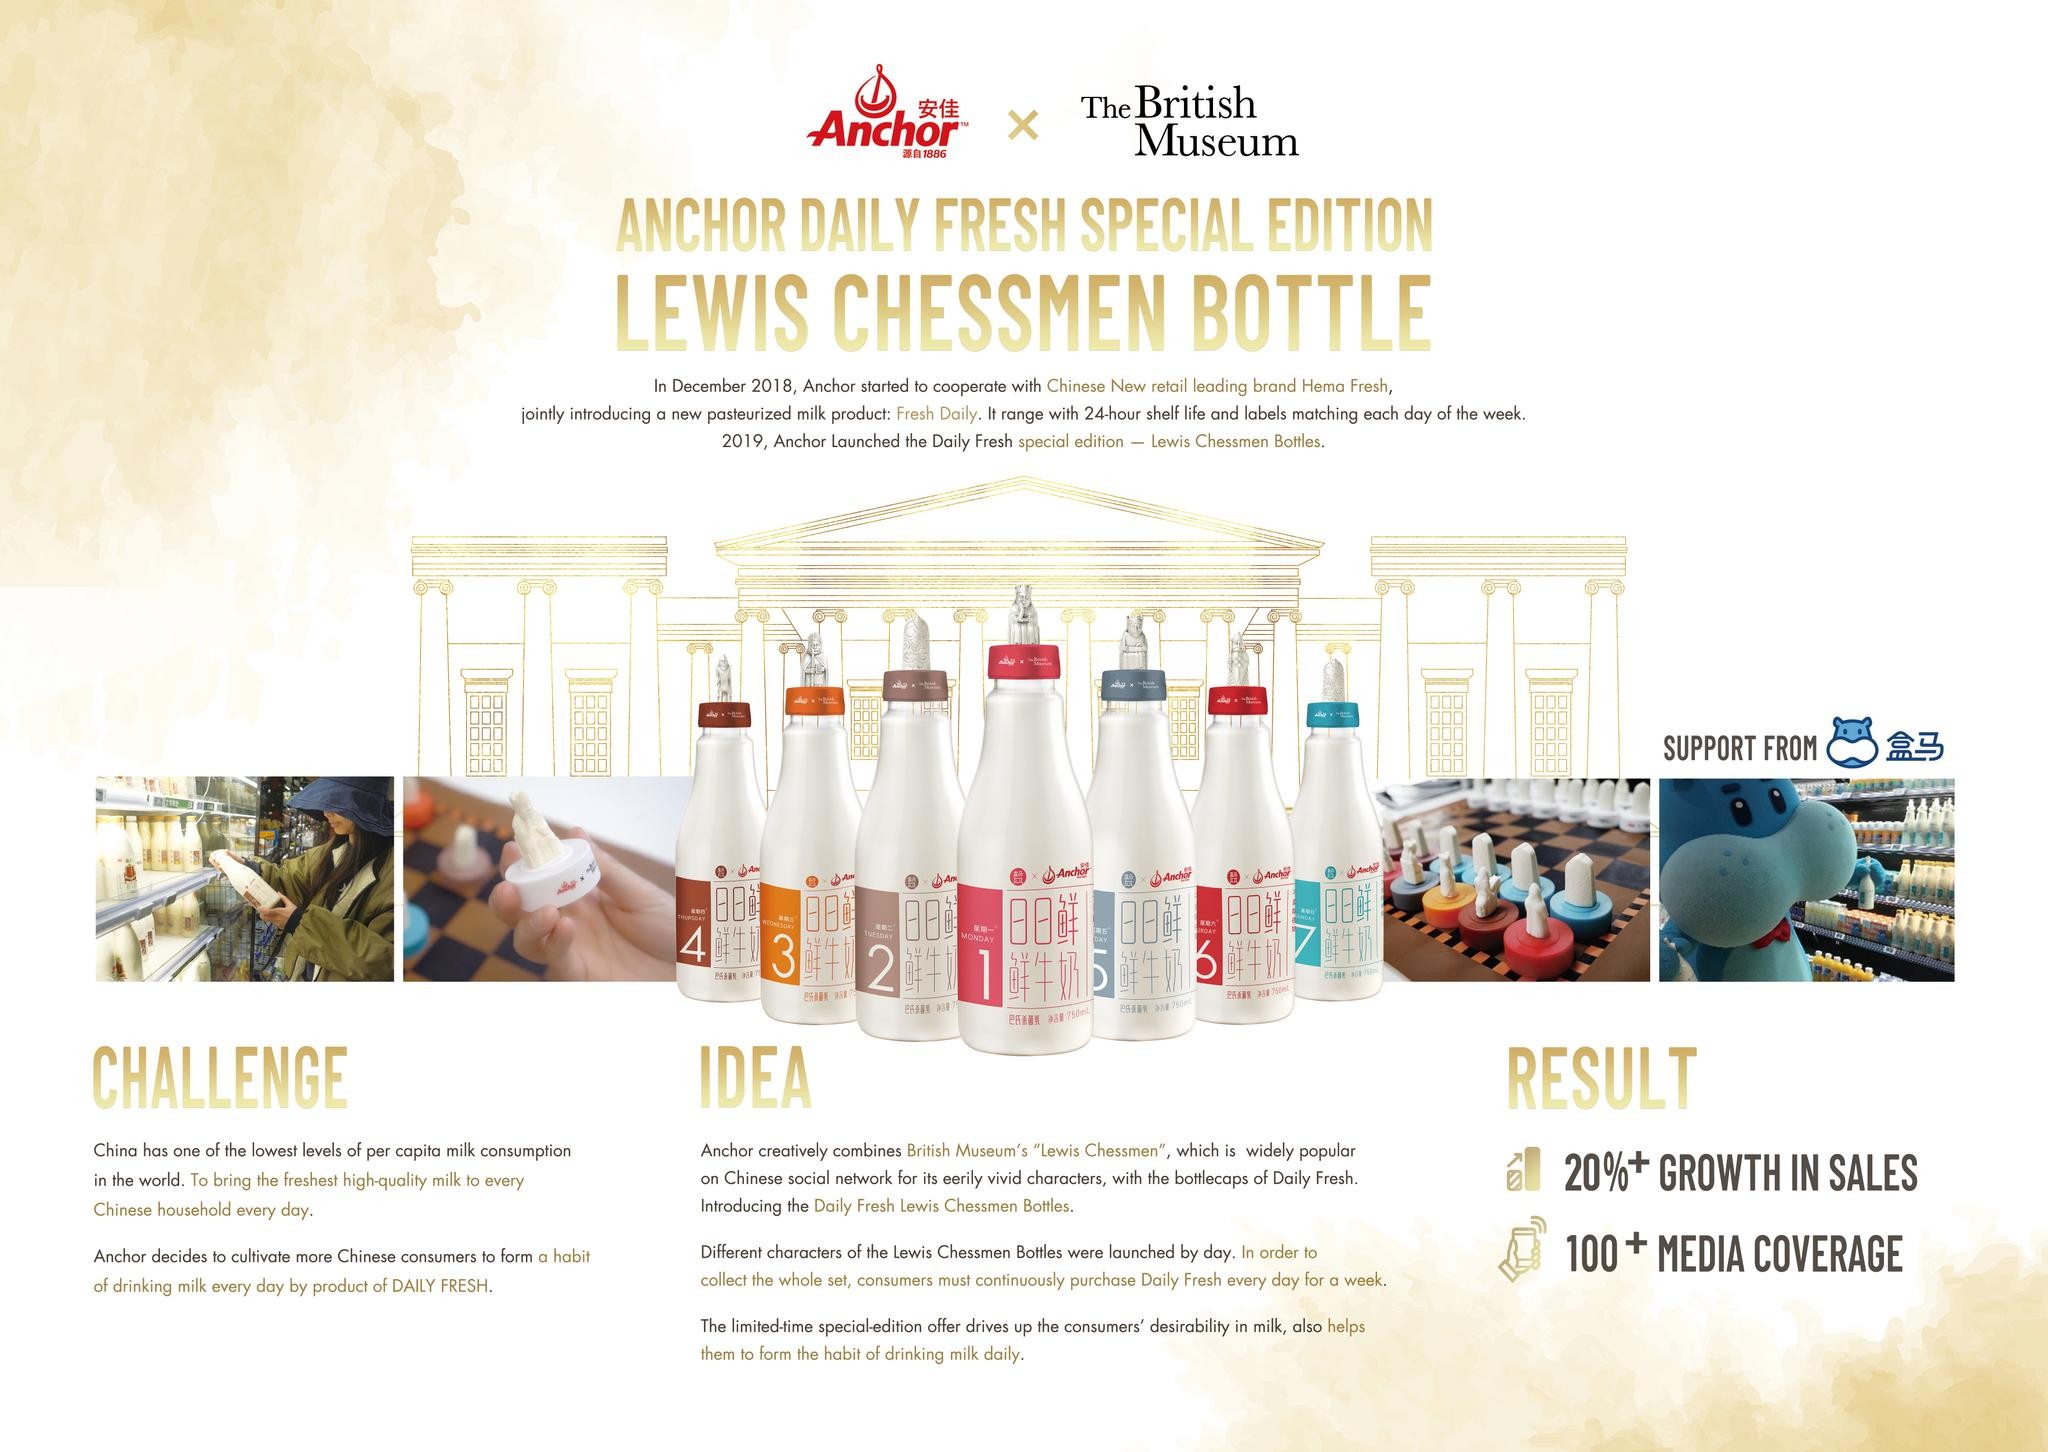 ANCHOR Daily Fresh Lewis Chessmen Bottles